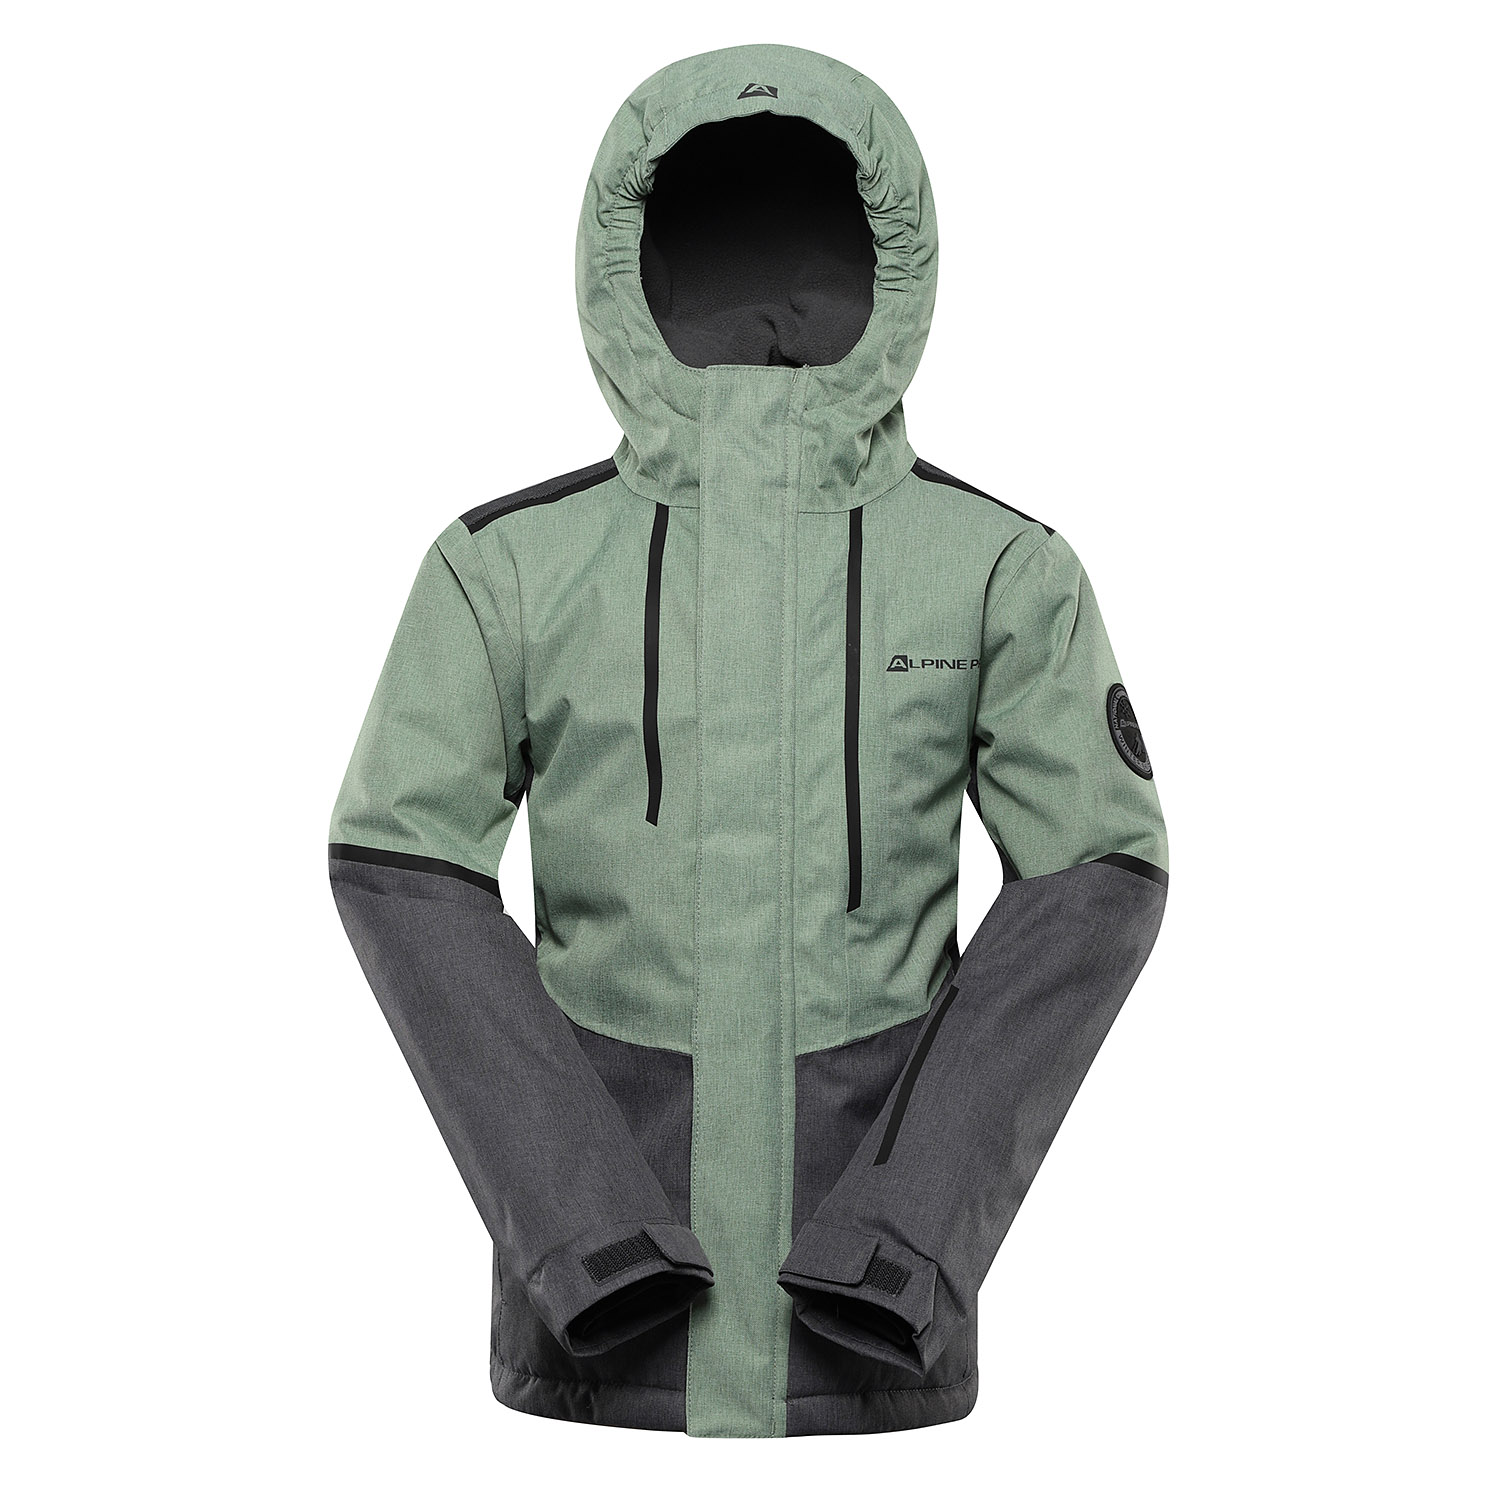 Children's ski jacket with ptx membrane ALPINE PRO ZARIBO loden frost